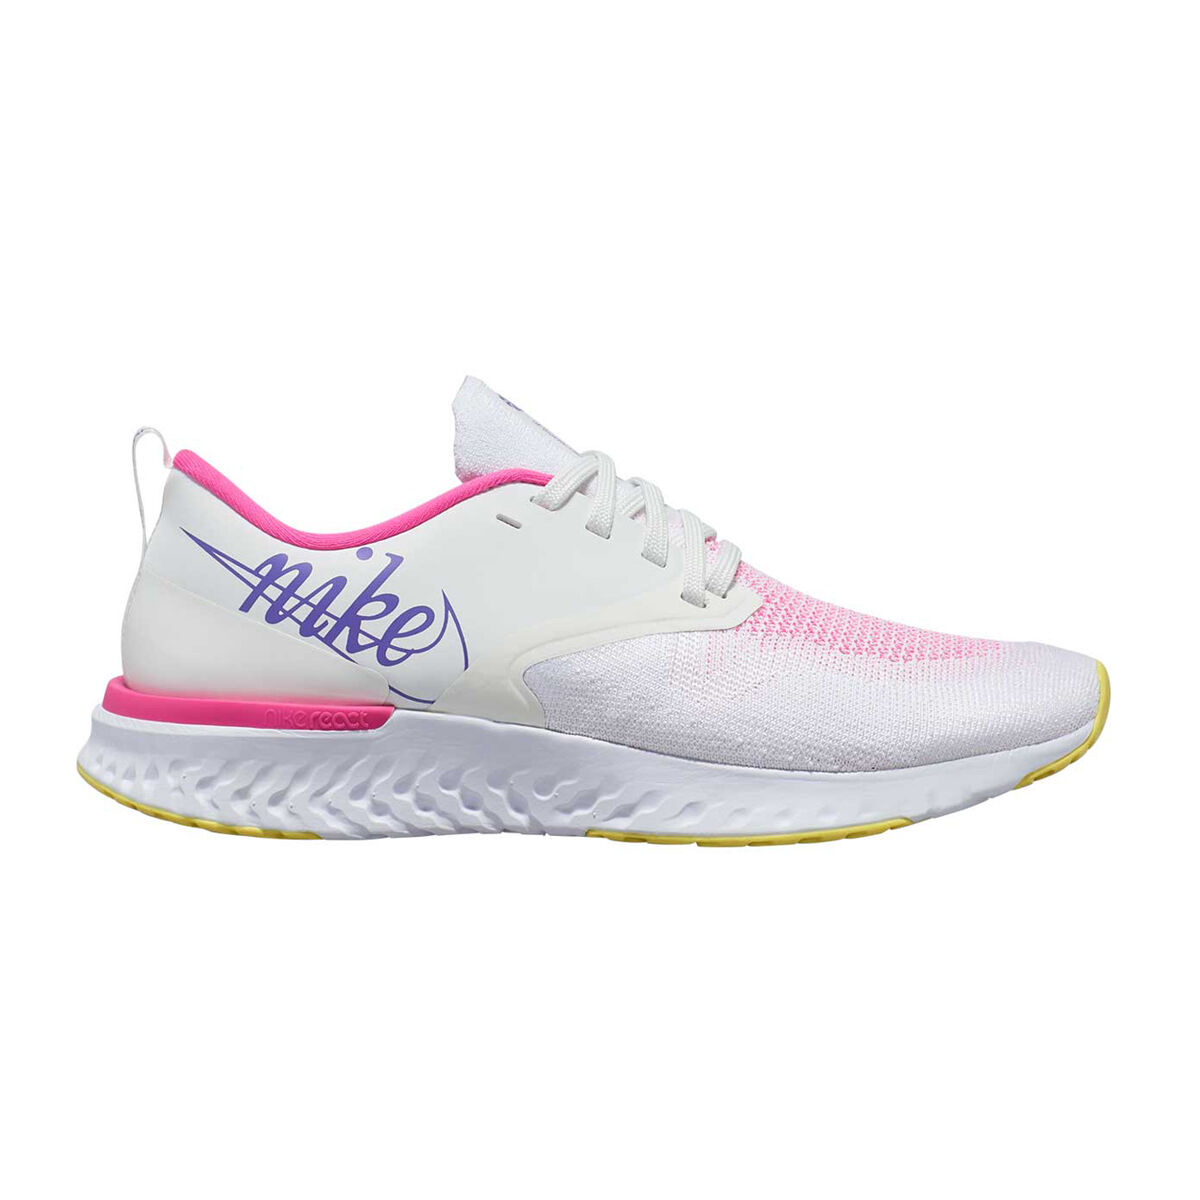 nike women's odyssey react flyknit 2 running shoes